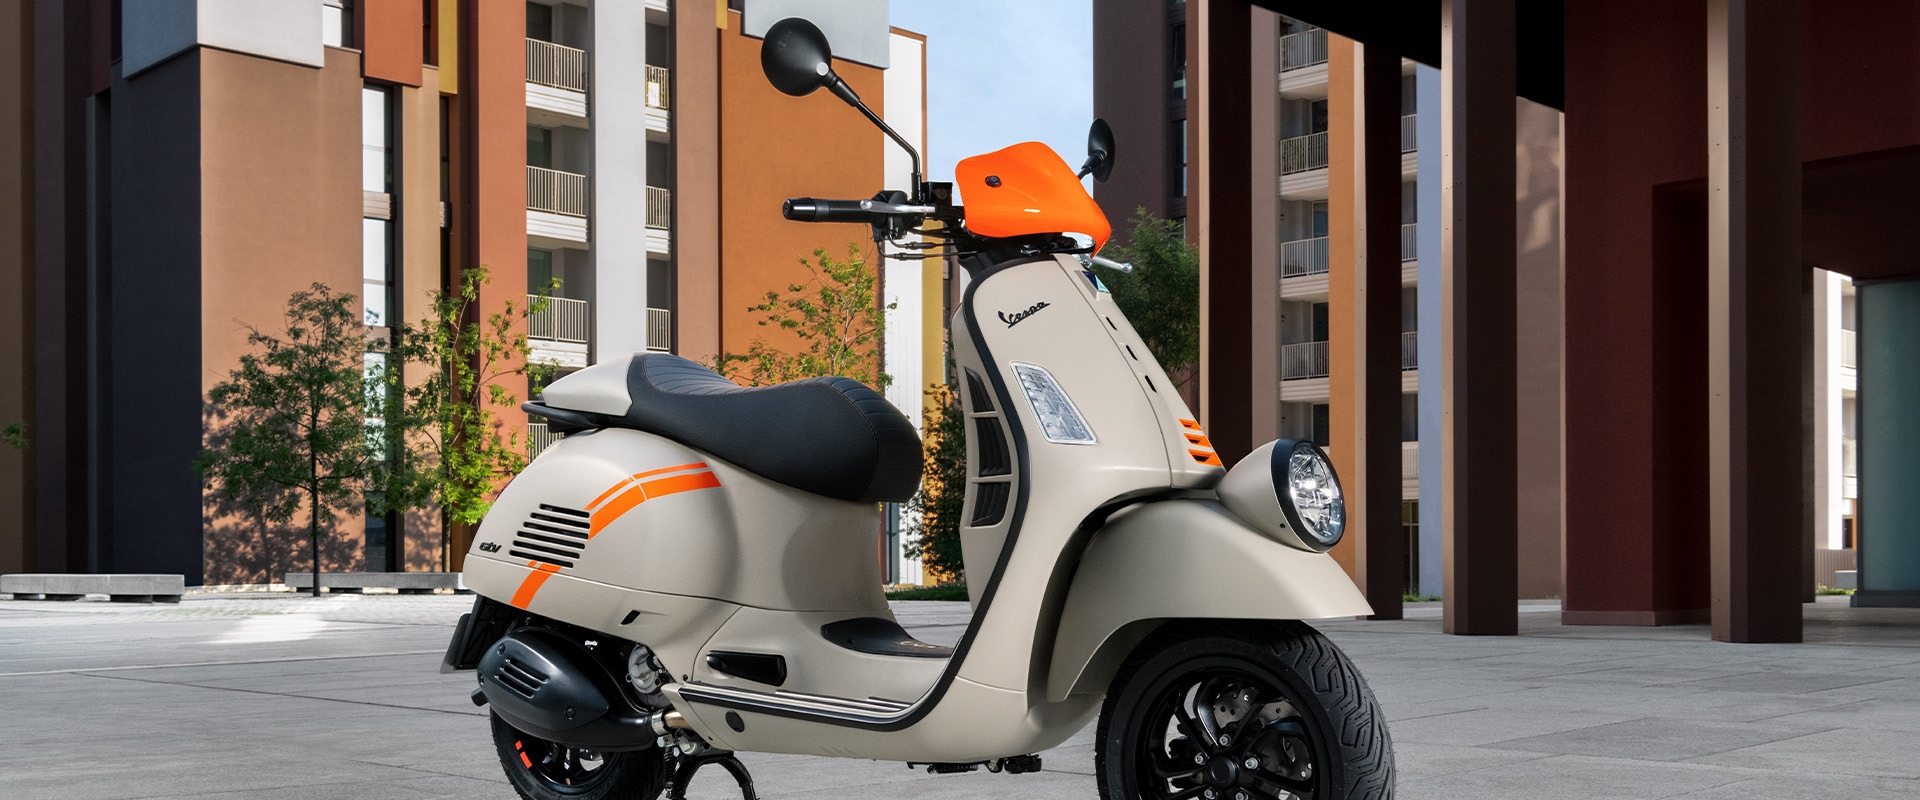 Housse protection scooter Vespa Primavera 125 - Bâche scooter